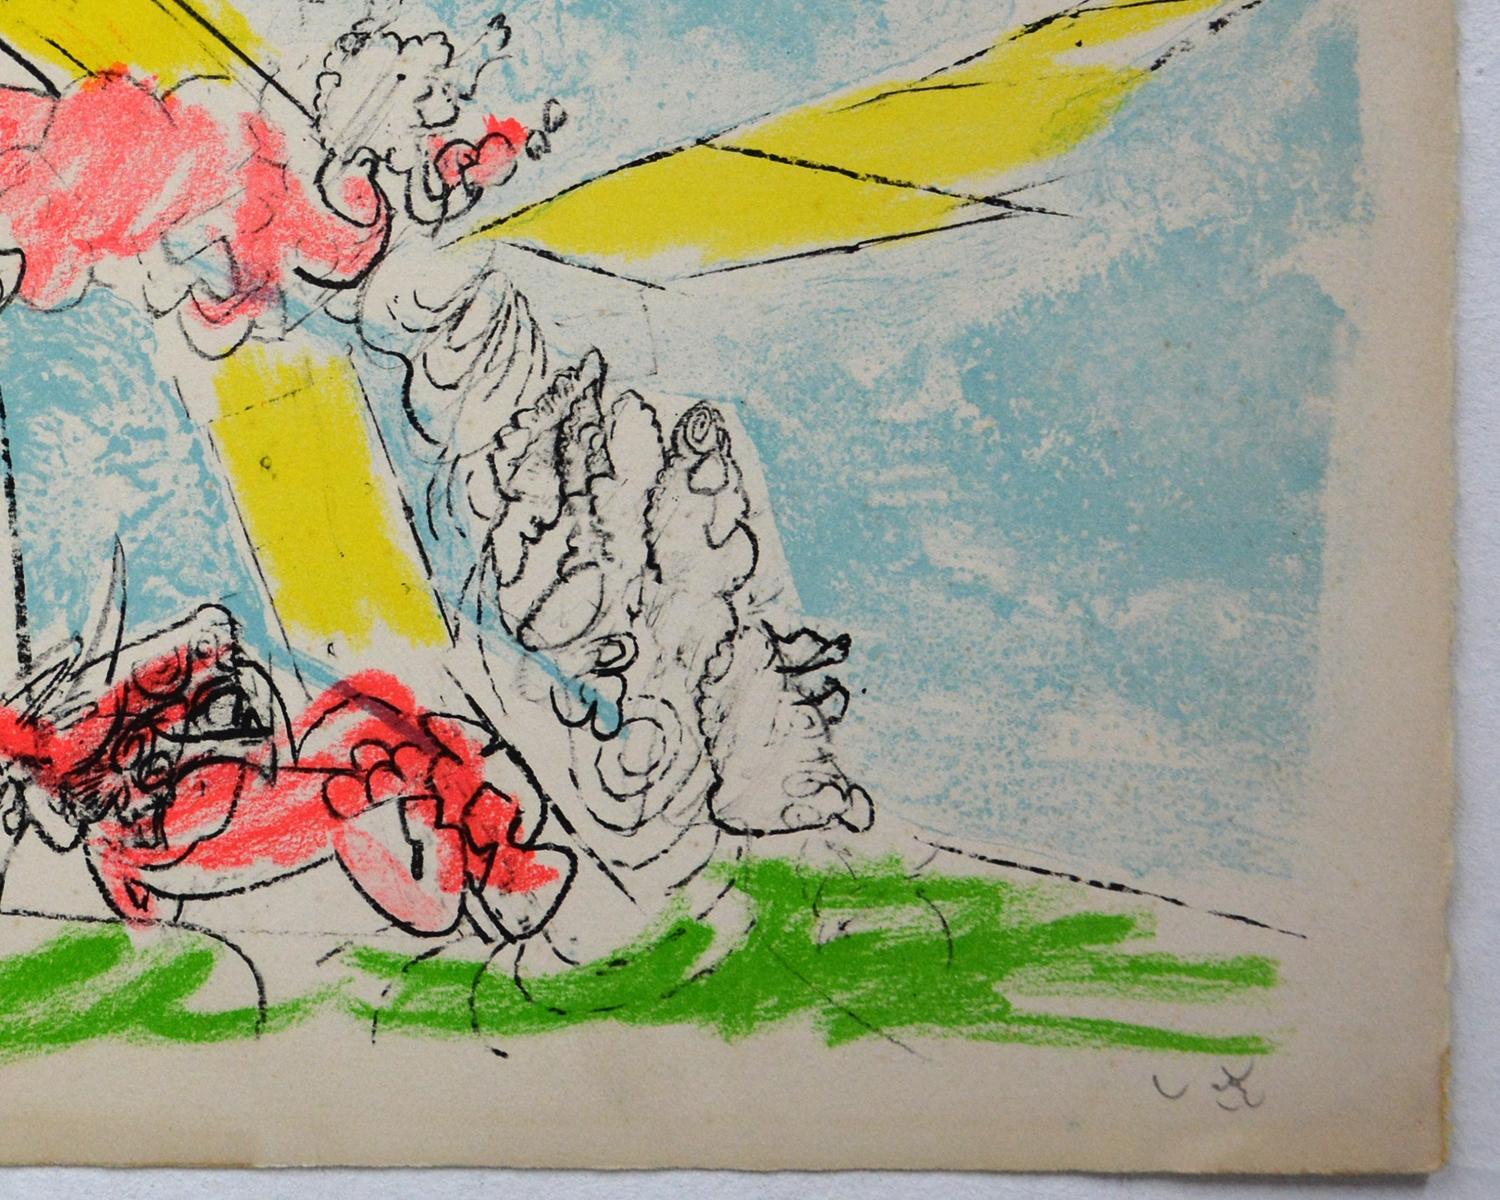 Roberto Matta, ¨Hecatomb of the Bulls V¨, 1971, Lithograph, 19.7x25.6 in 2